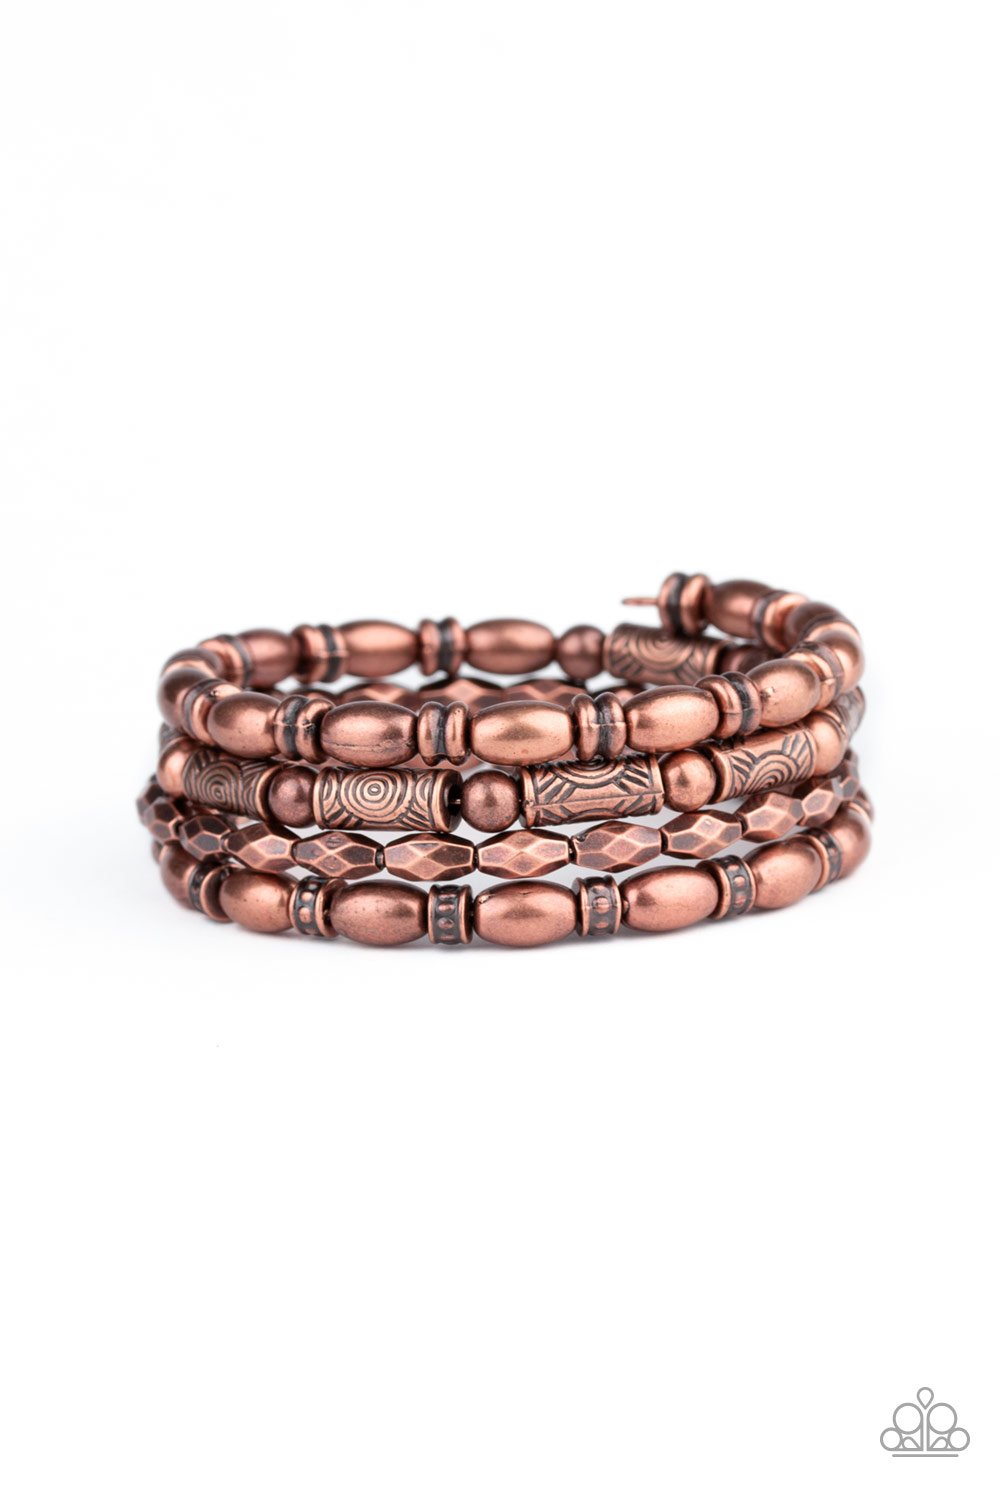 Texture Throwndown - Copper Bracelet